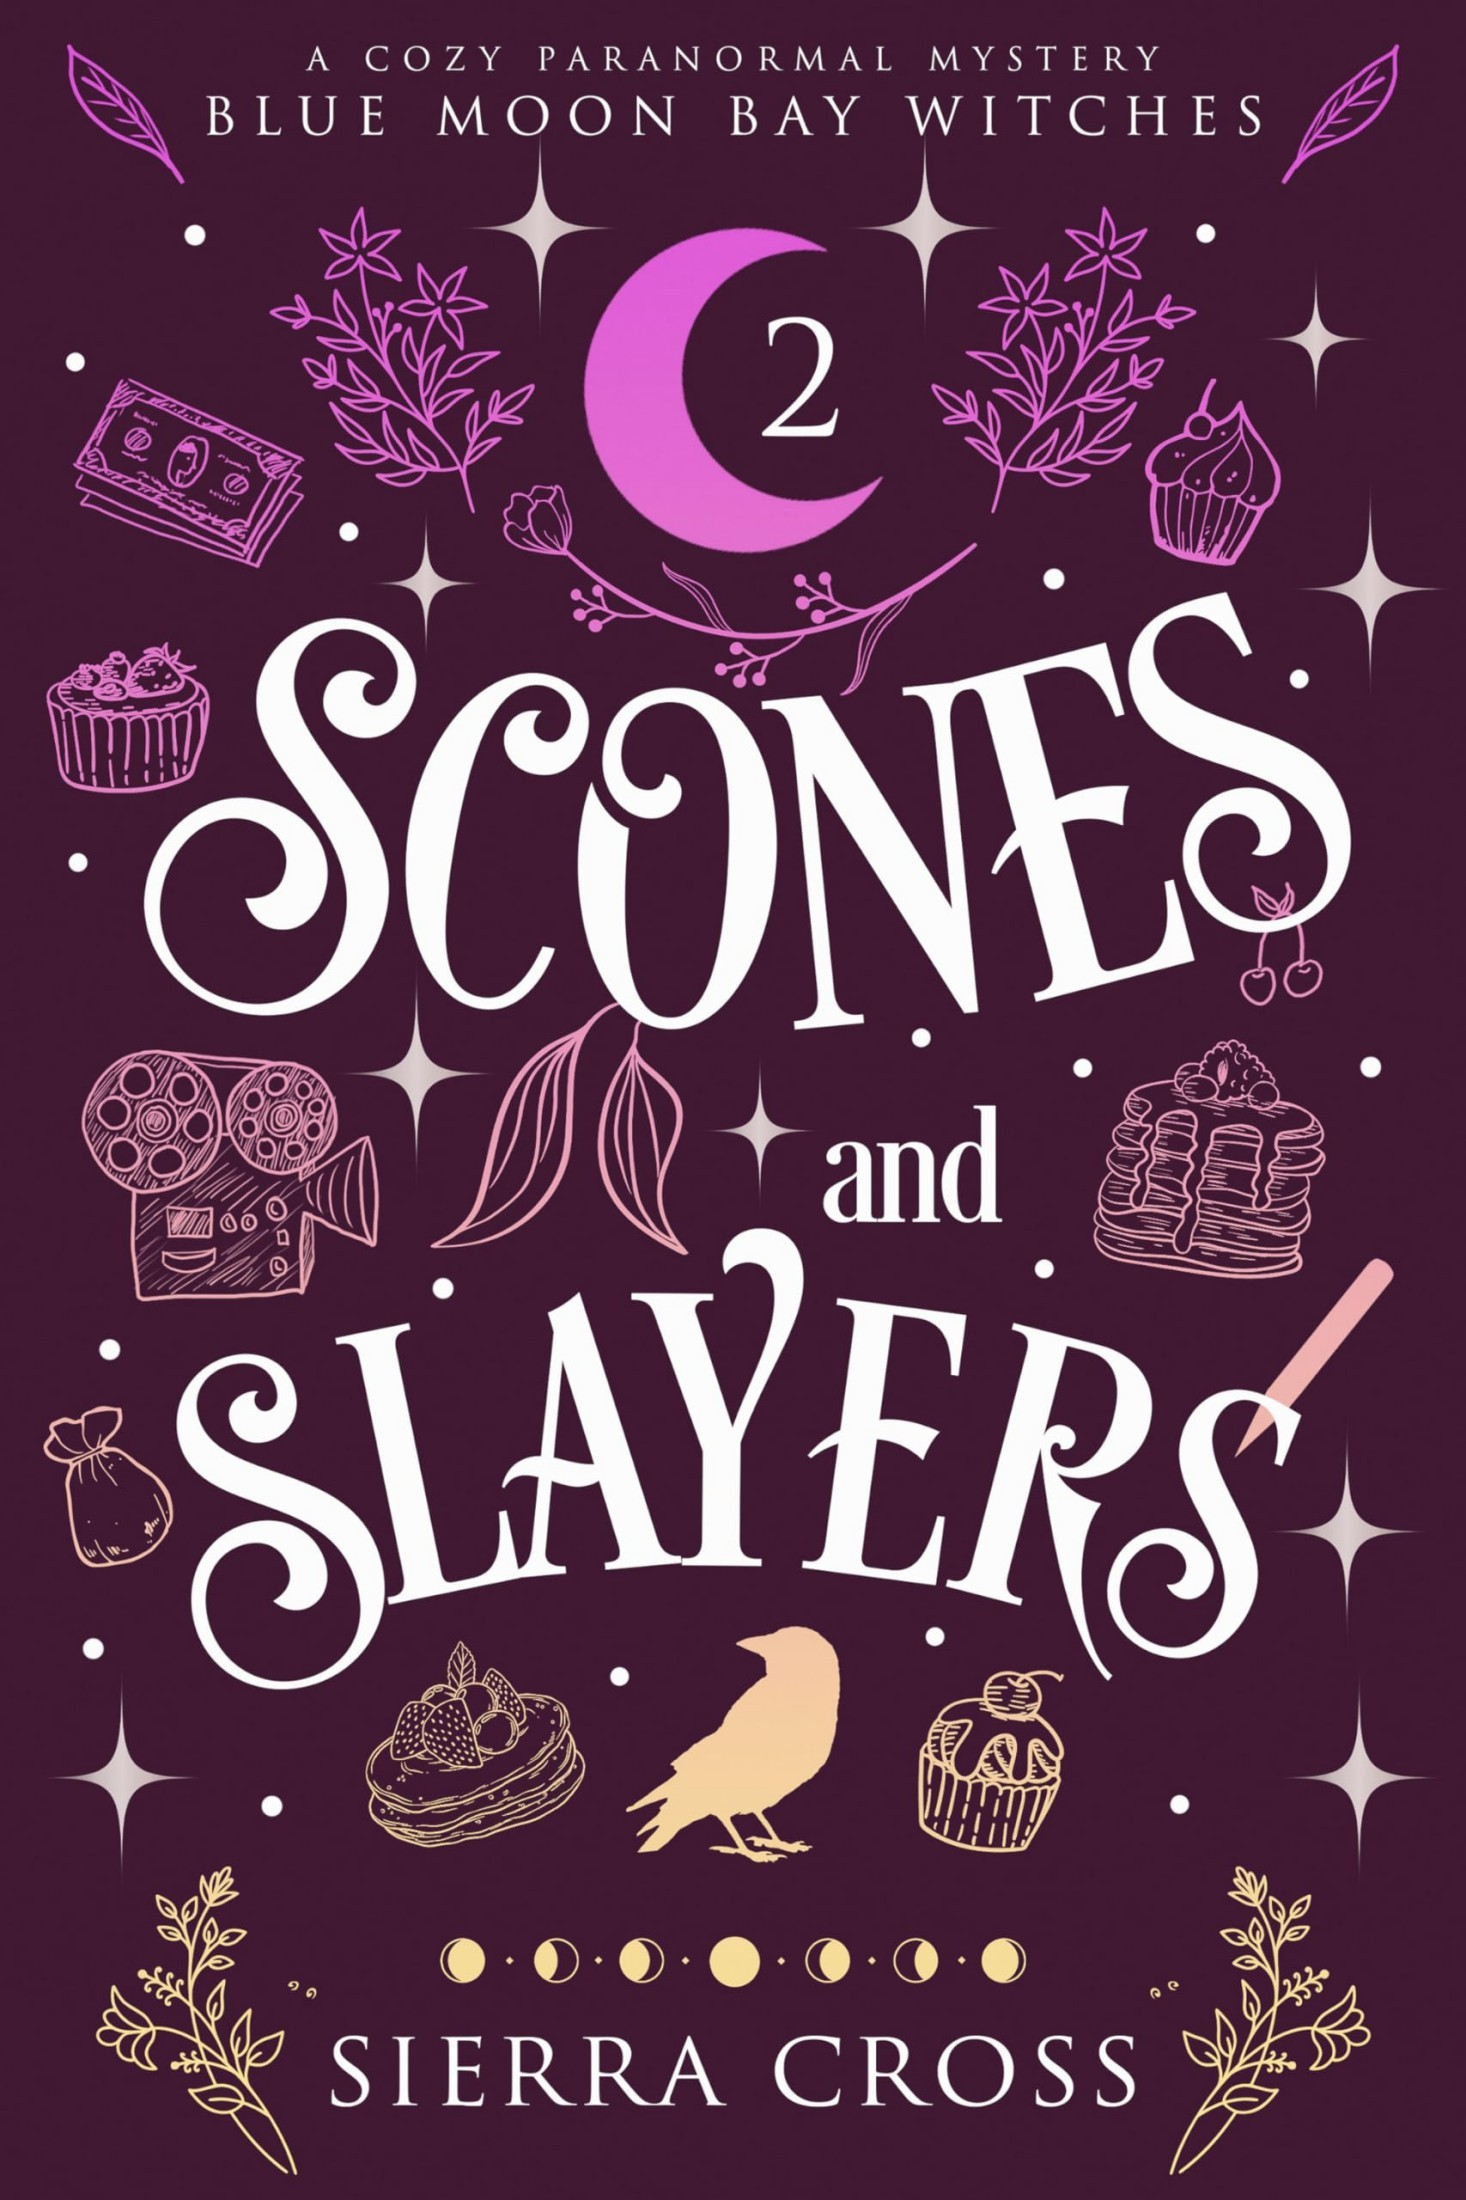 Scones and Slayers